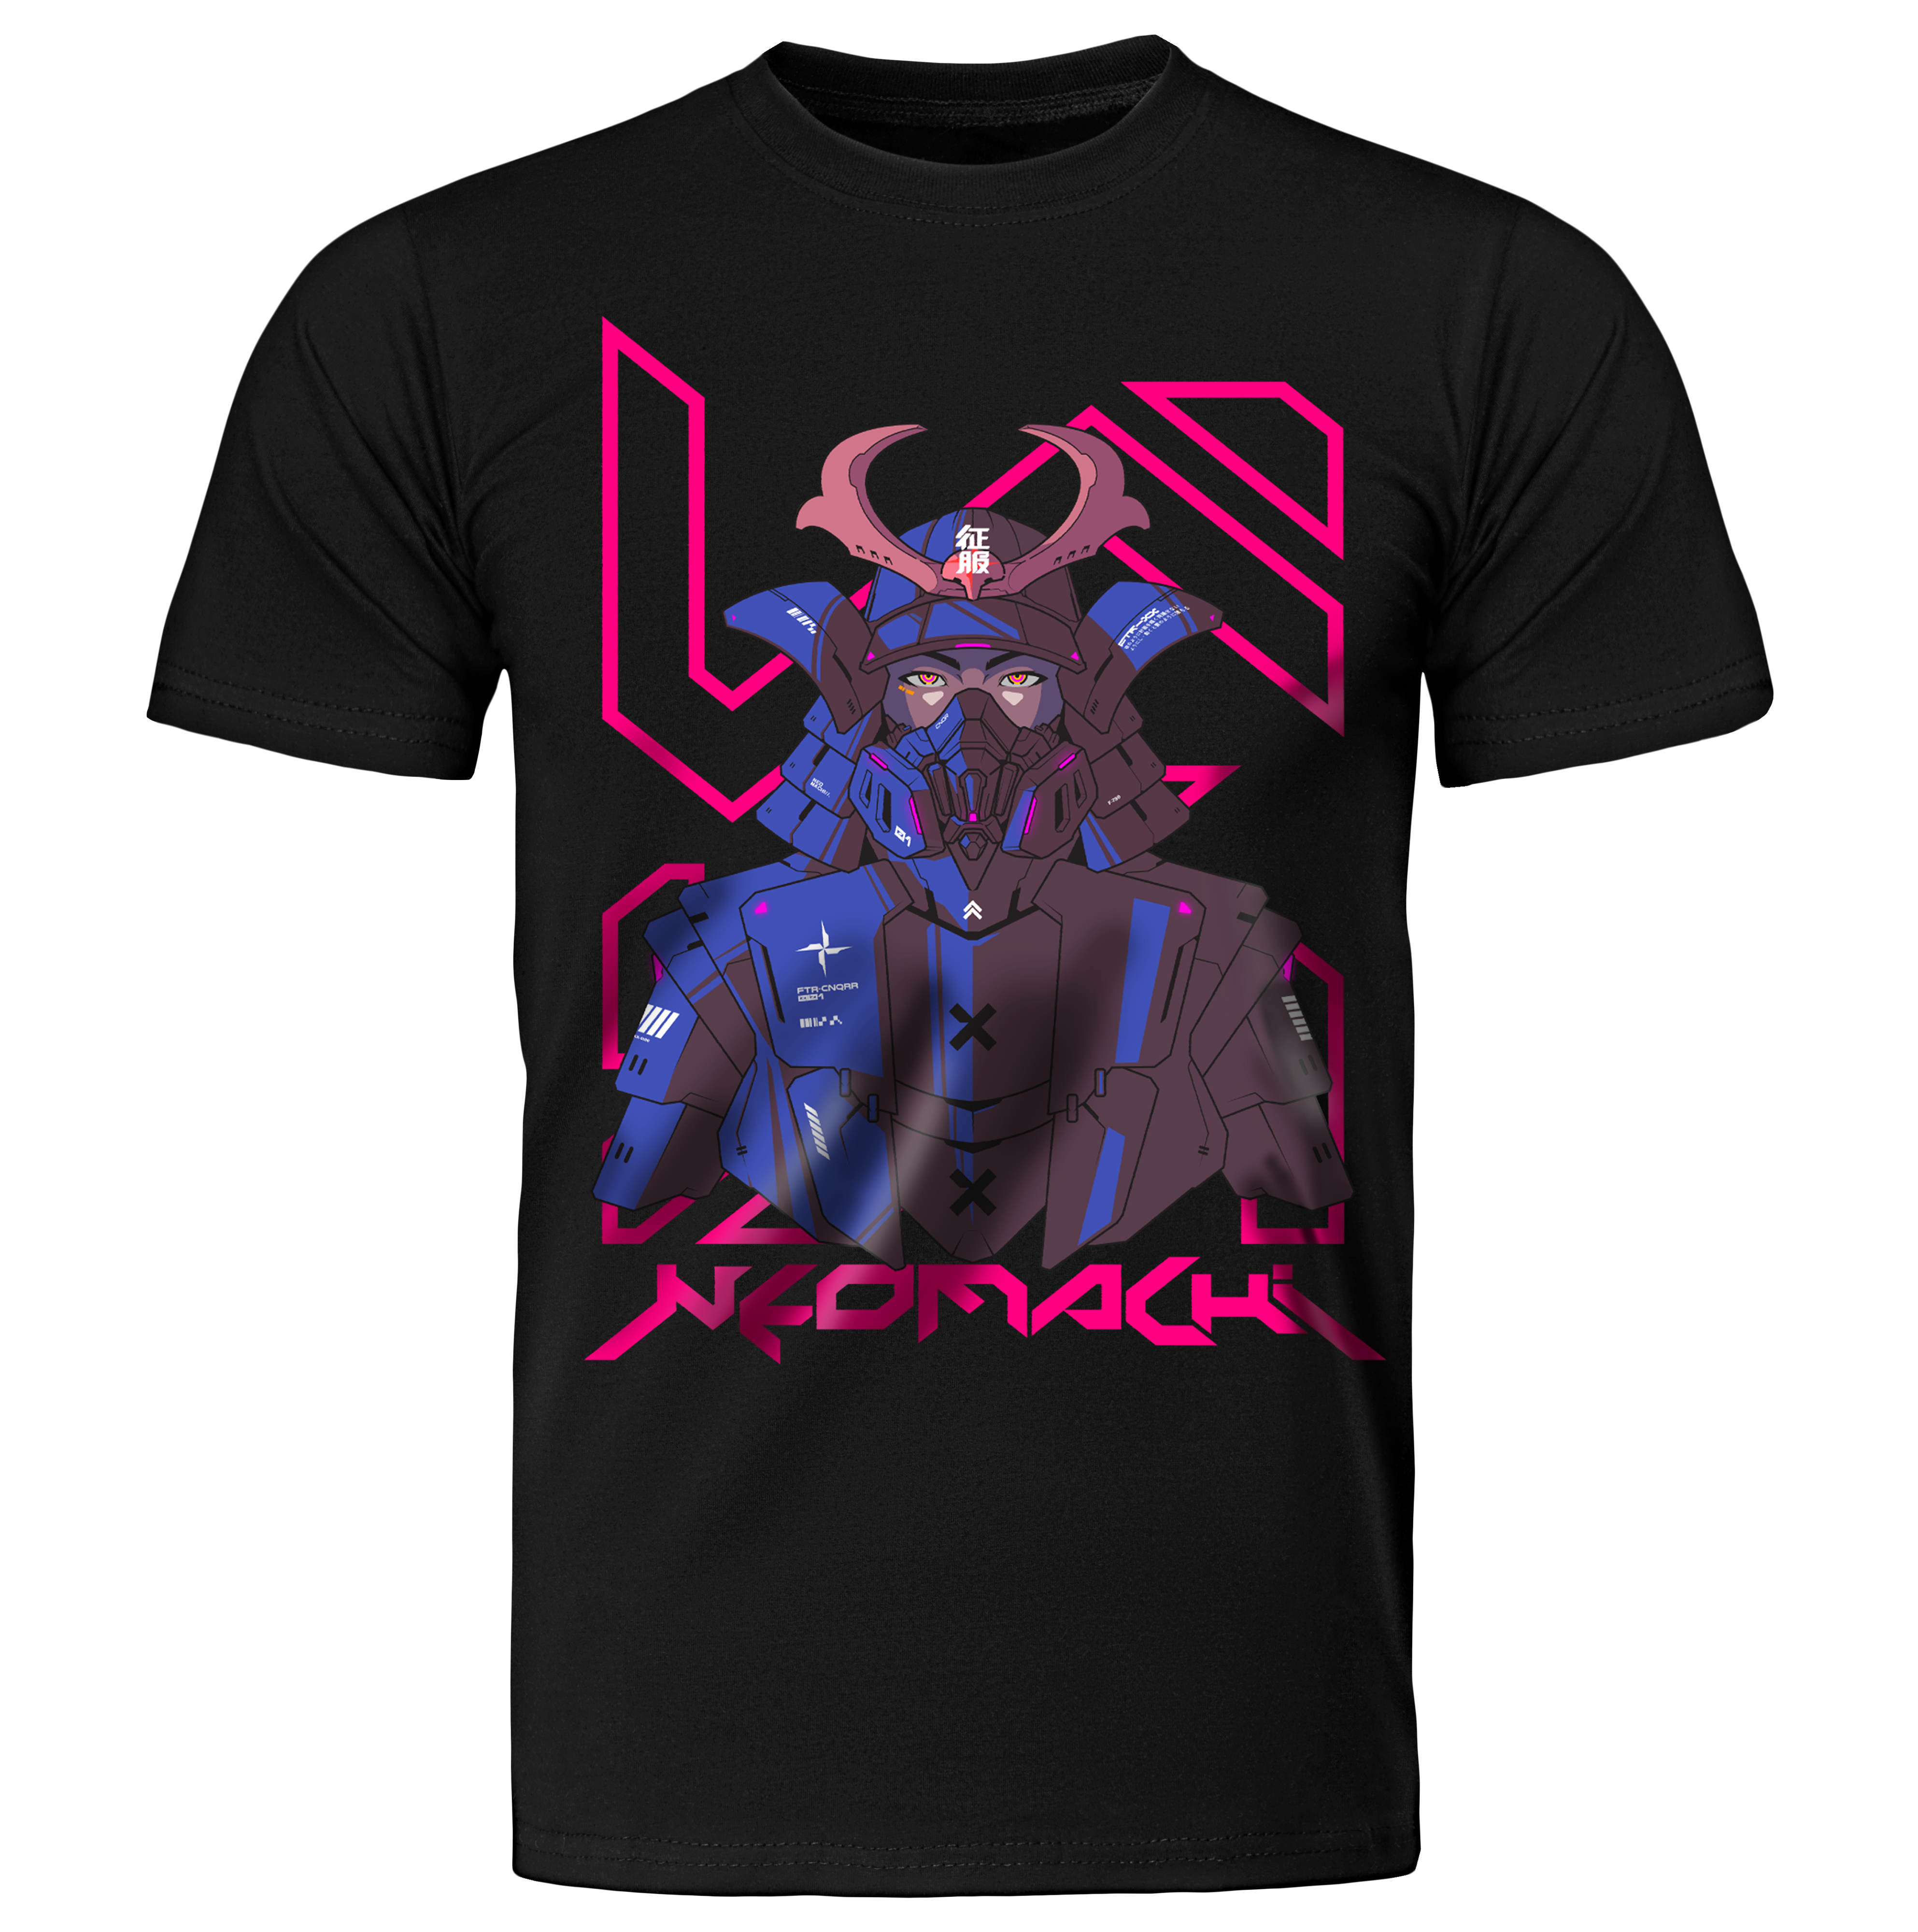 5amur41 T-shirt - Black - Front - cyberpunk T-shirt - Neomachi